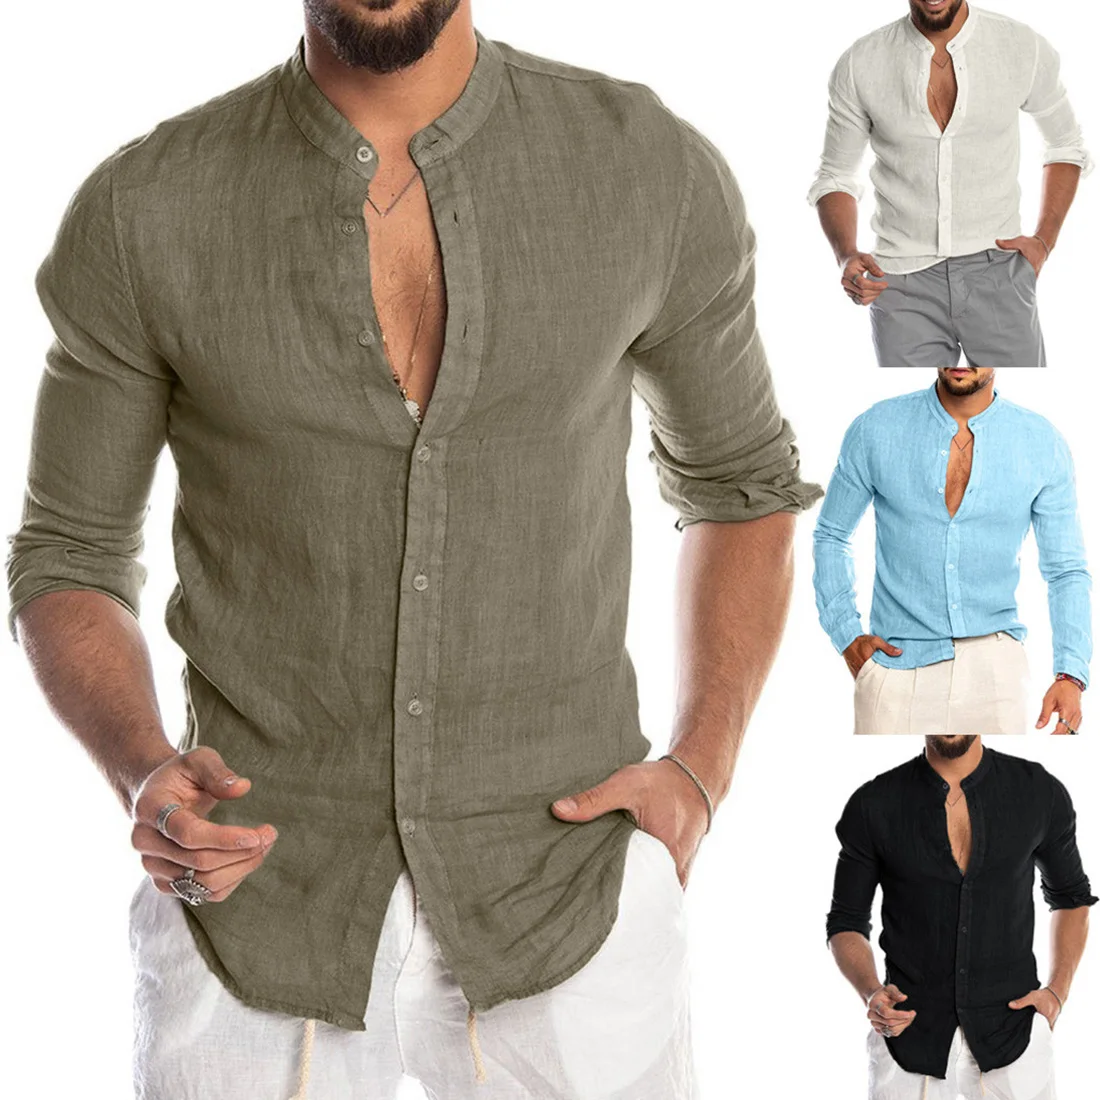 

Nova camisa de linho de casual blusa masculina solta tops manga curta camiseta primavera outono casual bonito camisa masculina